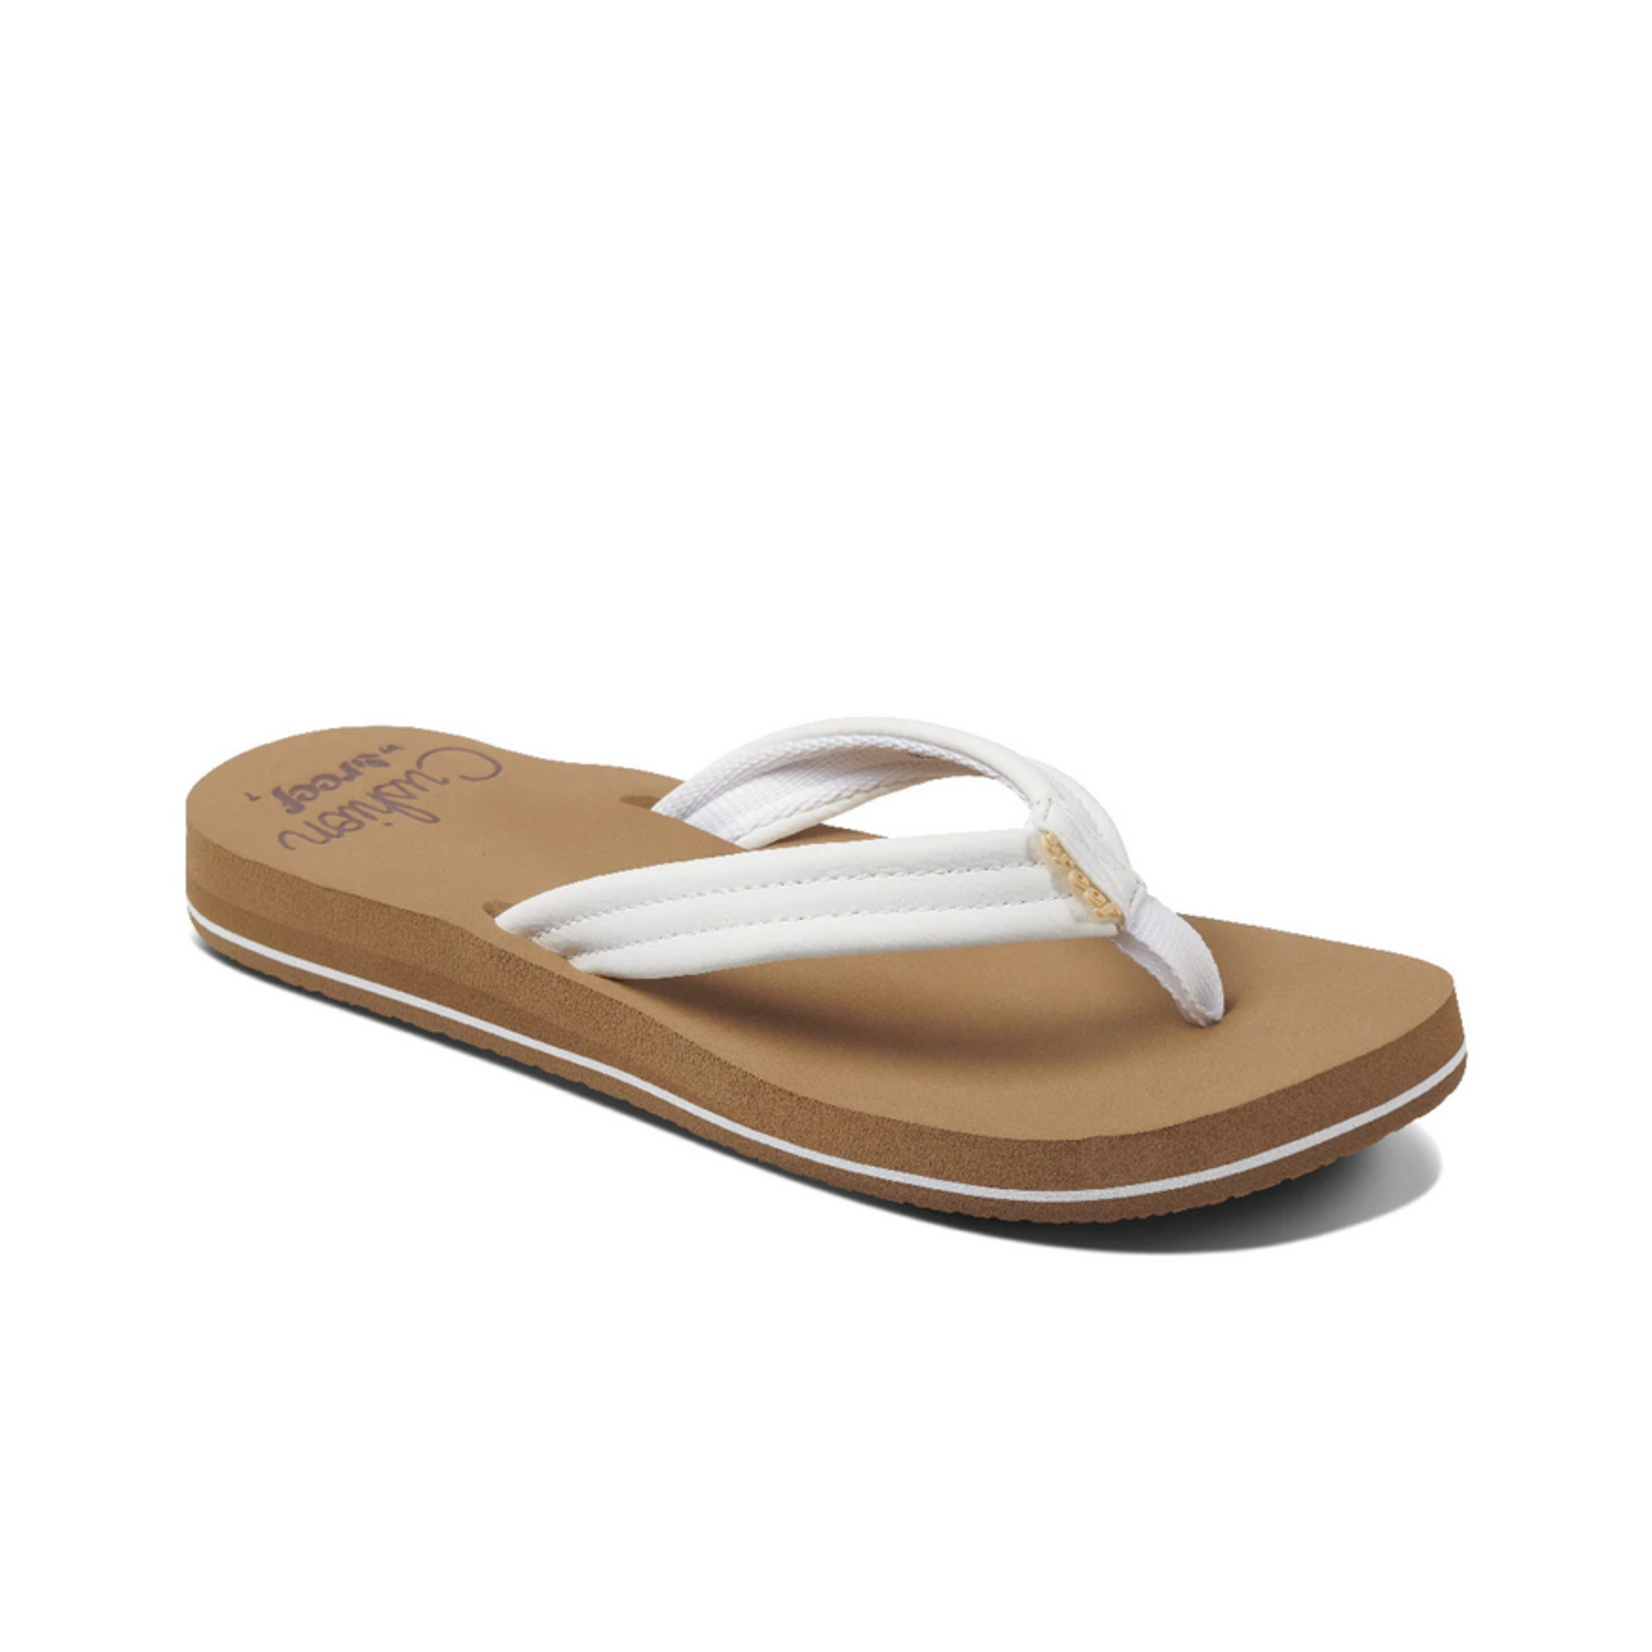 REEF Women's Reef Cushion Breeze Flip Flop Sandals